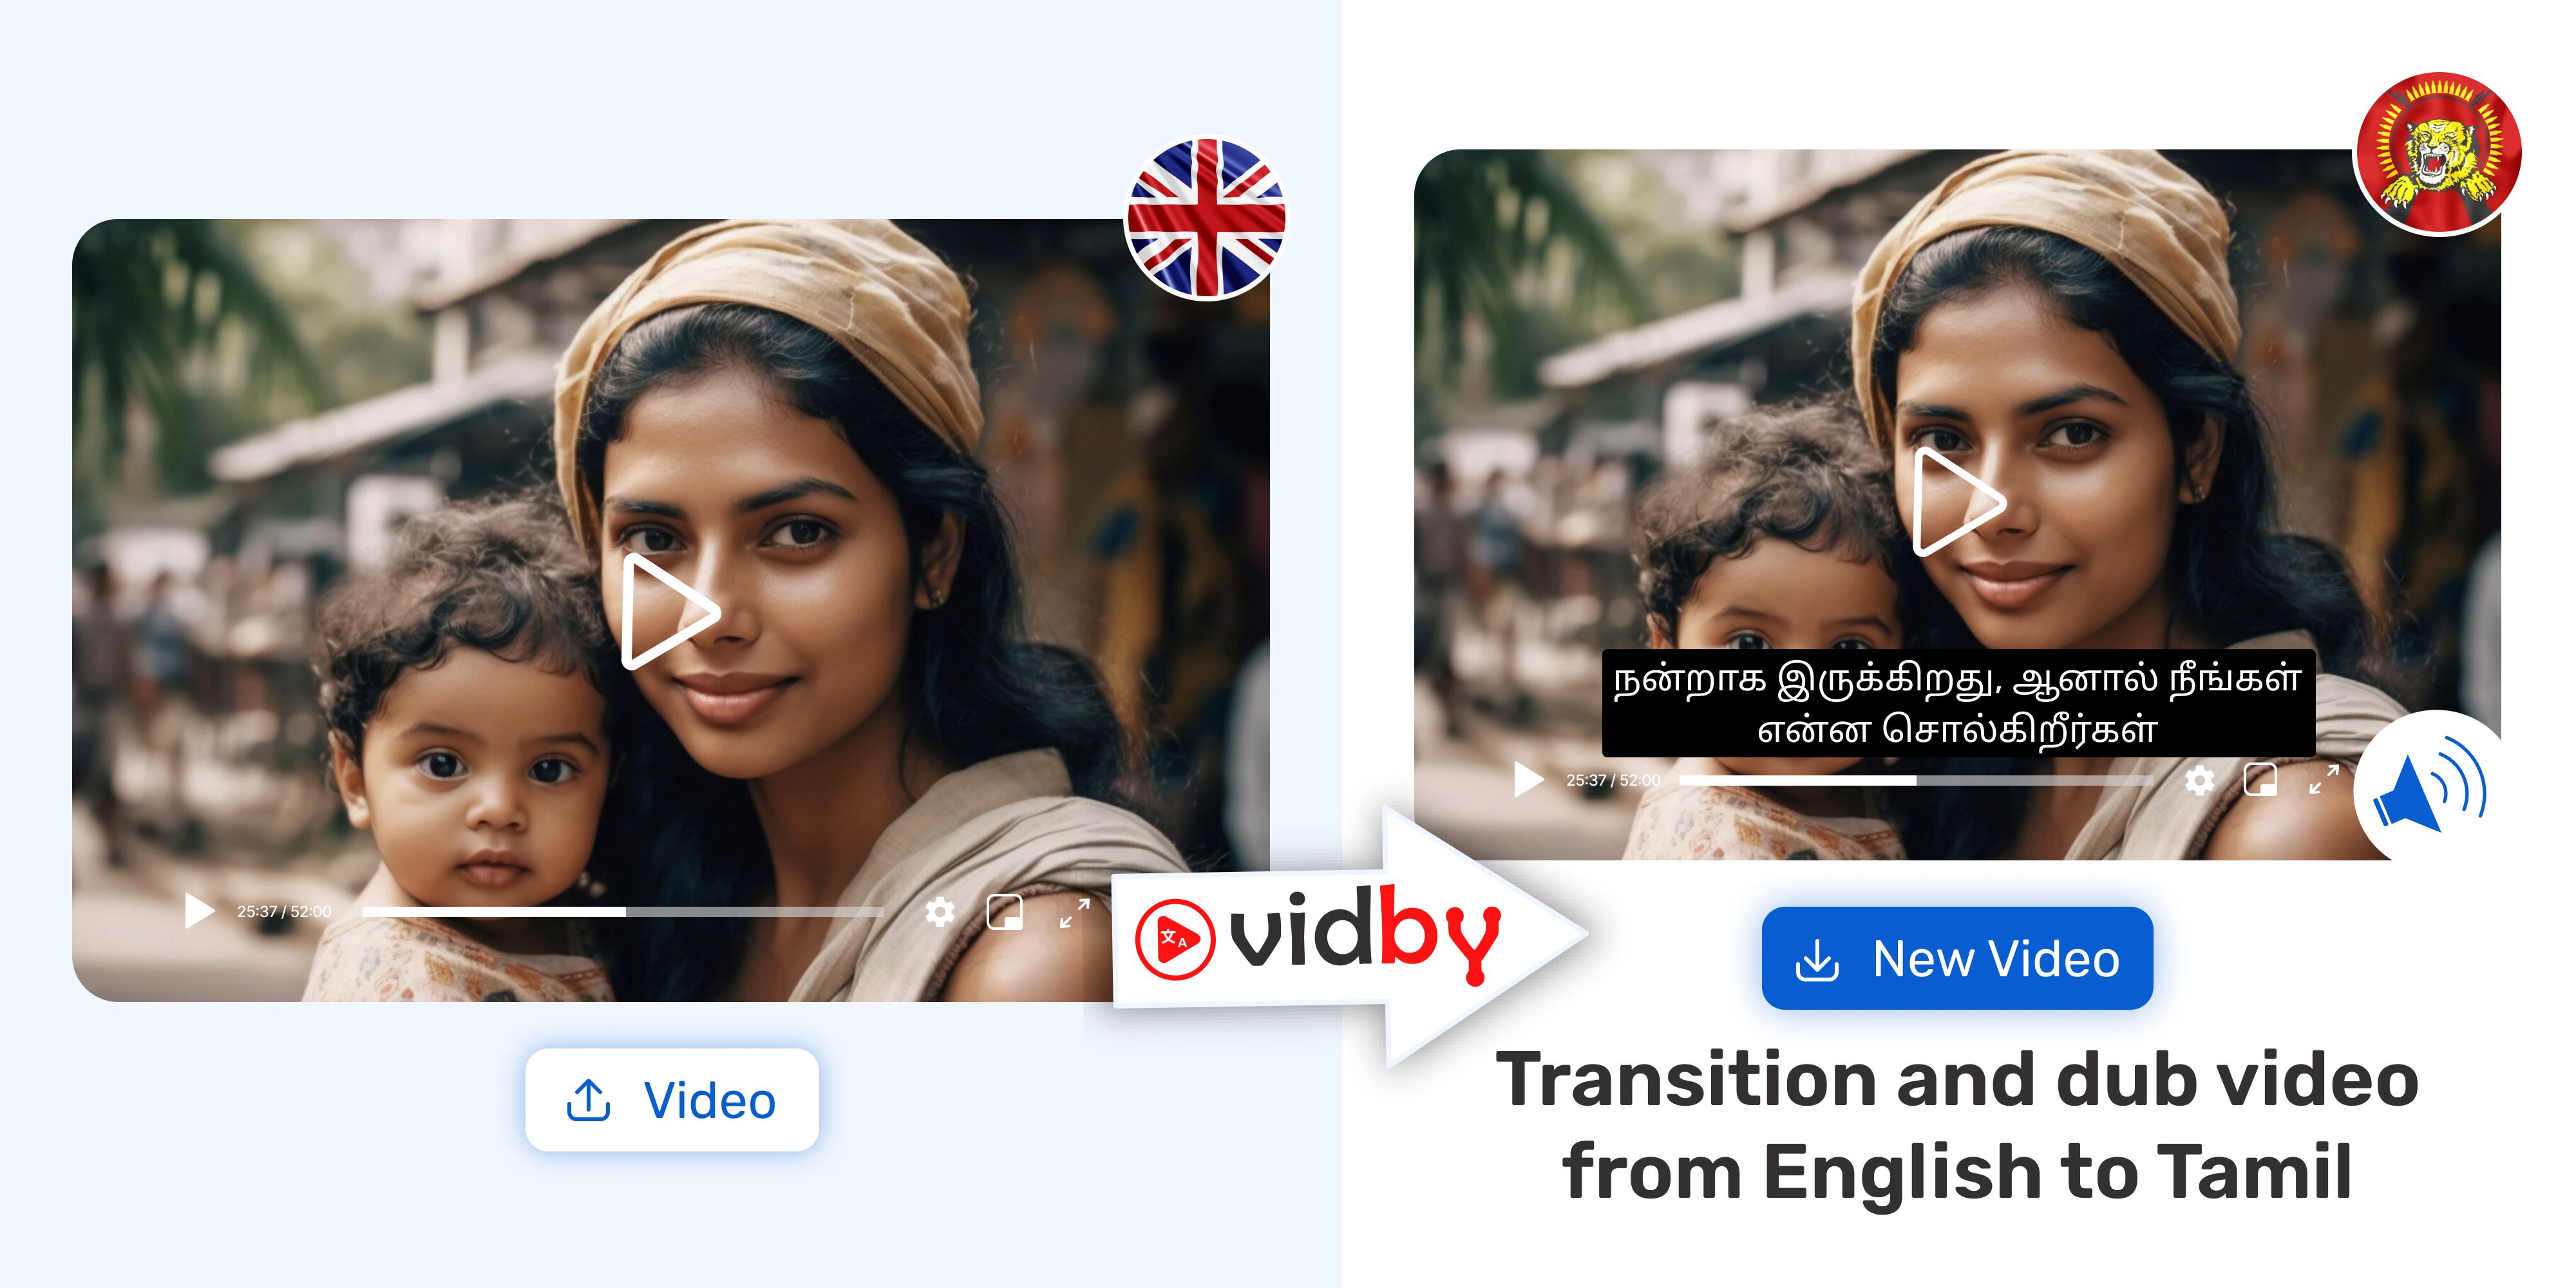 Translate English video to Tamil